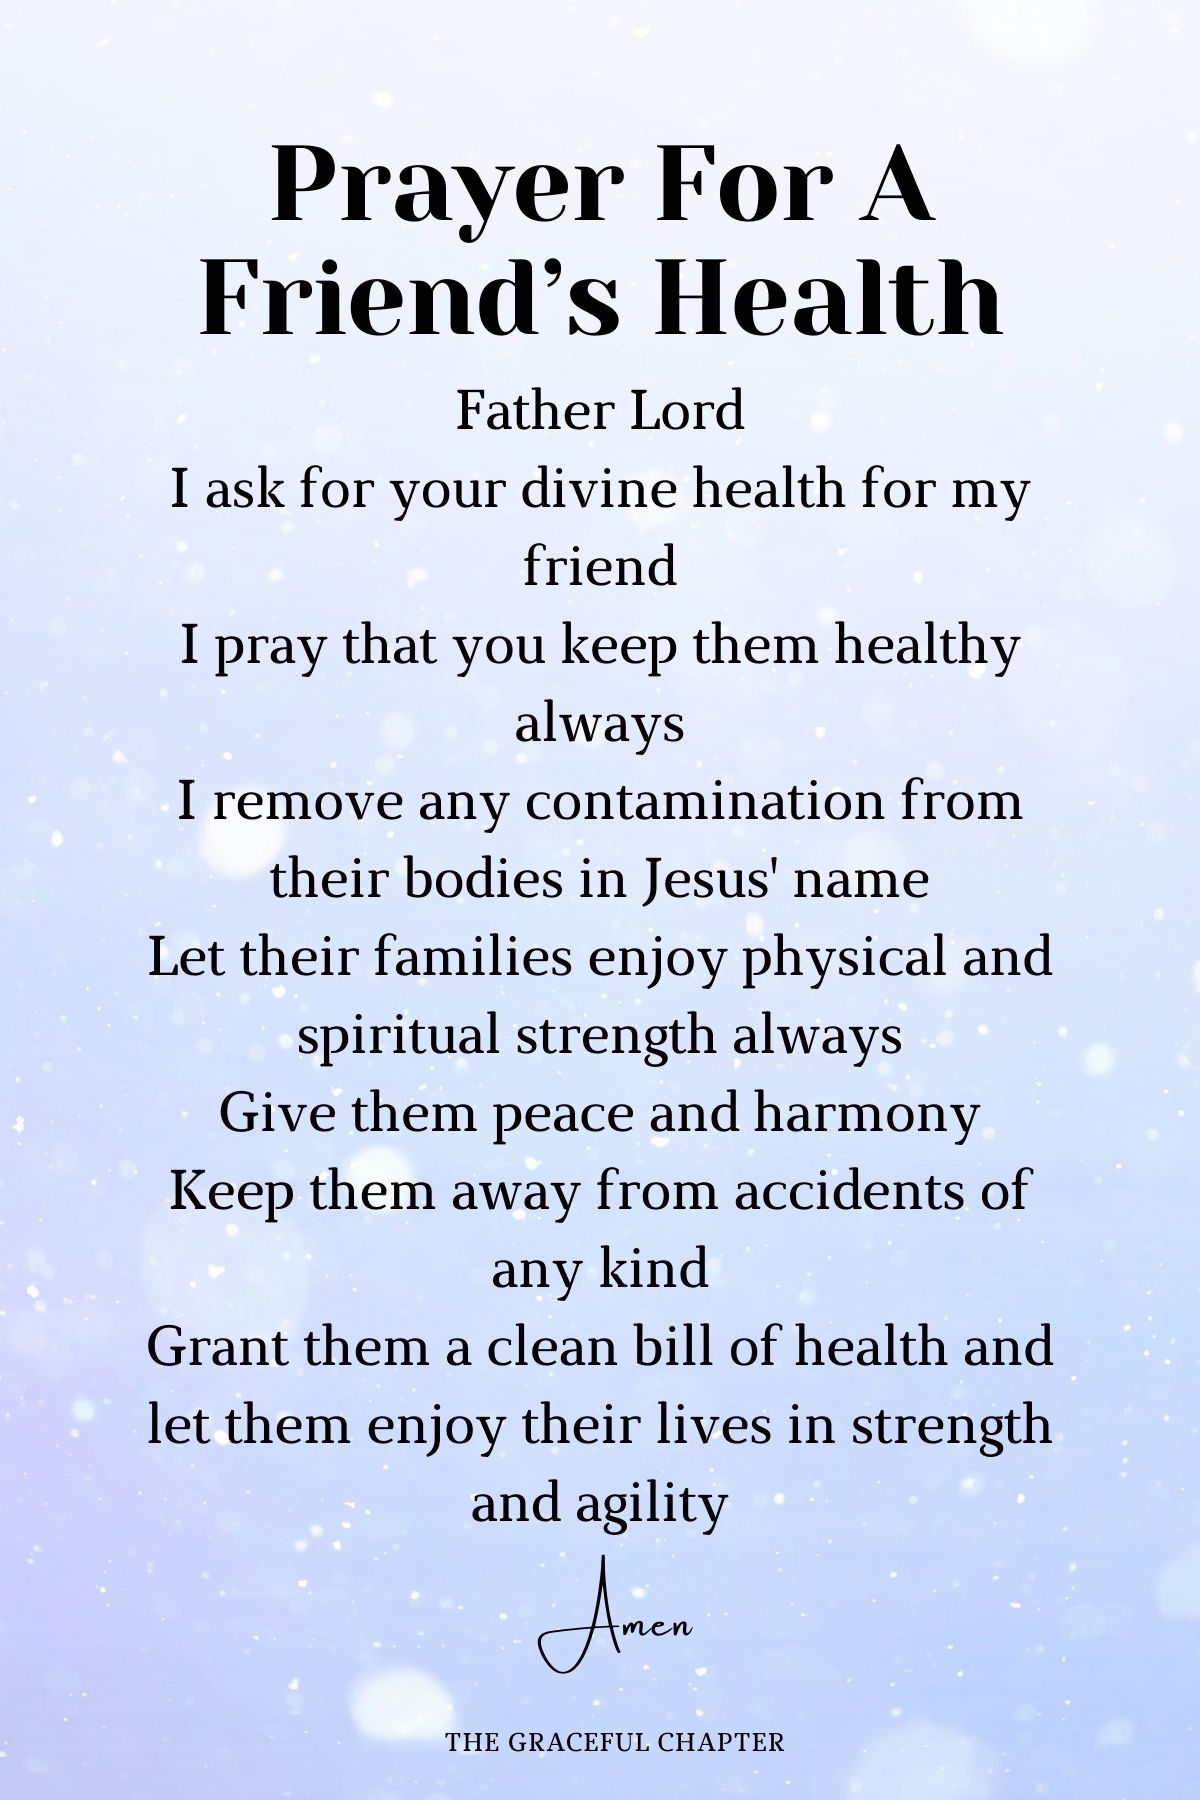 Prayer for a friend’s health